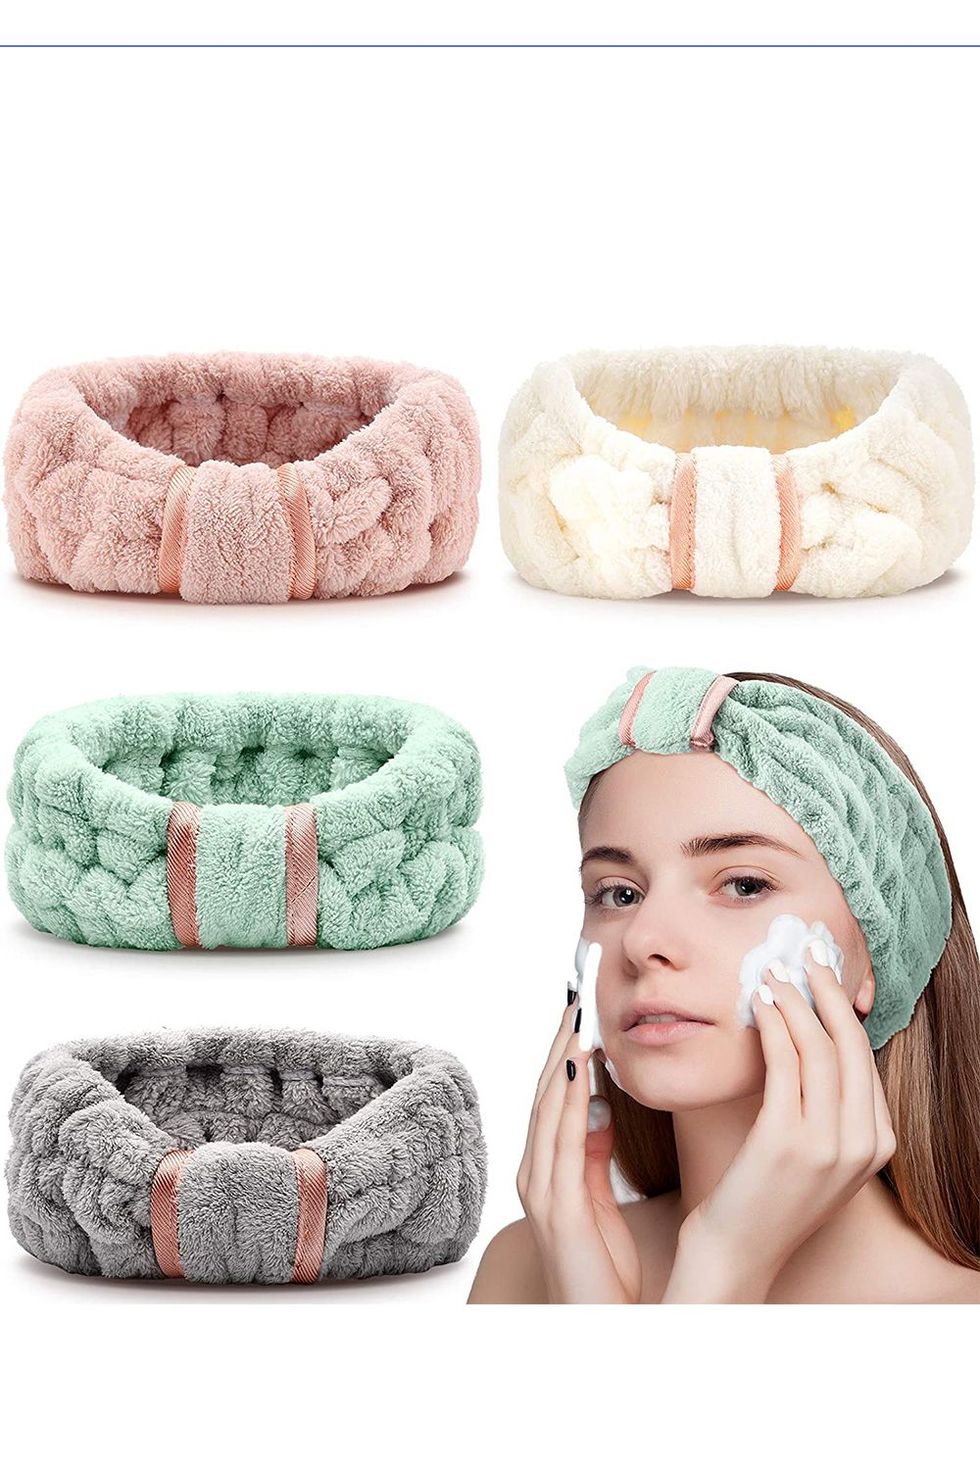 9 Best Spa Headbands 2021 - Cute Spa Headbands for Face Washing